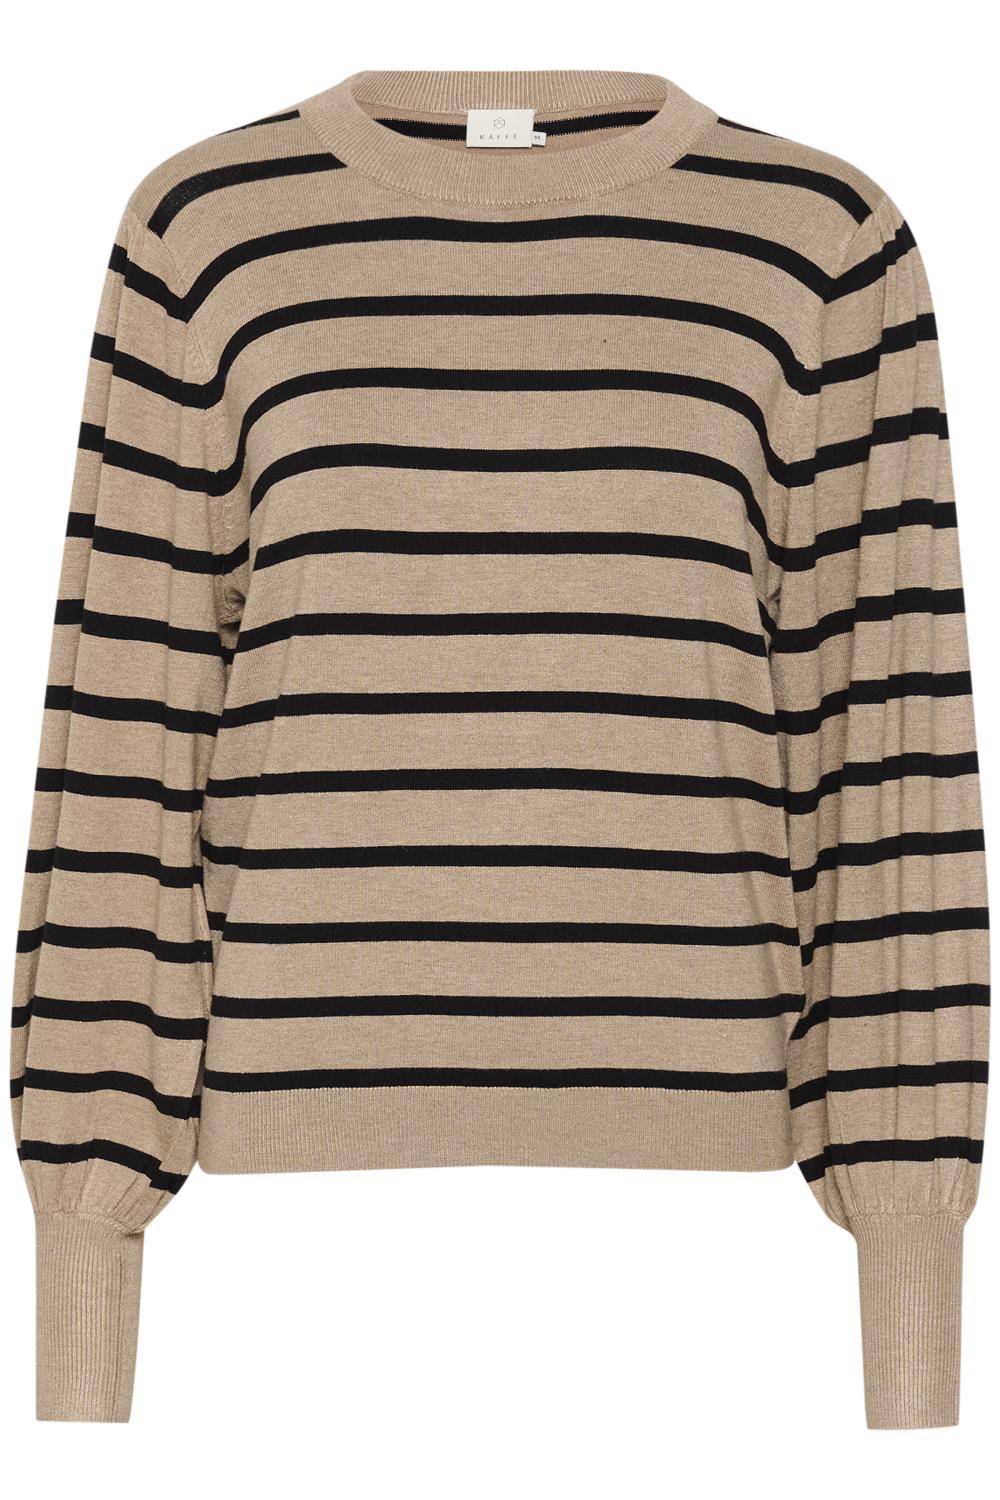 Kaffe KAmala Stripe Knit Pullover, mørk beige/sort stripet